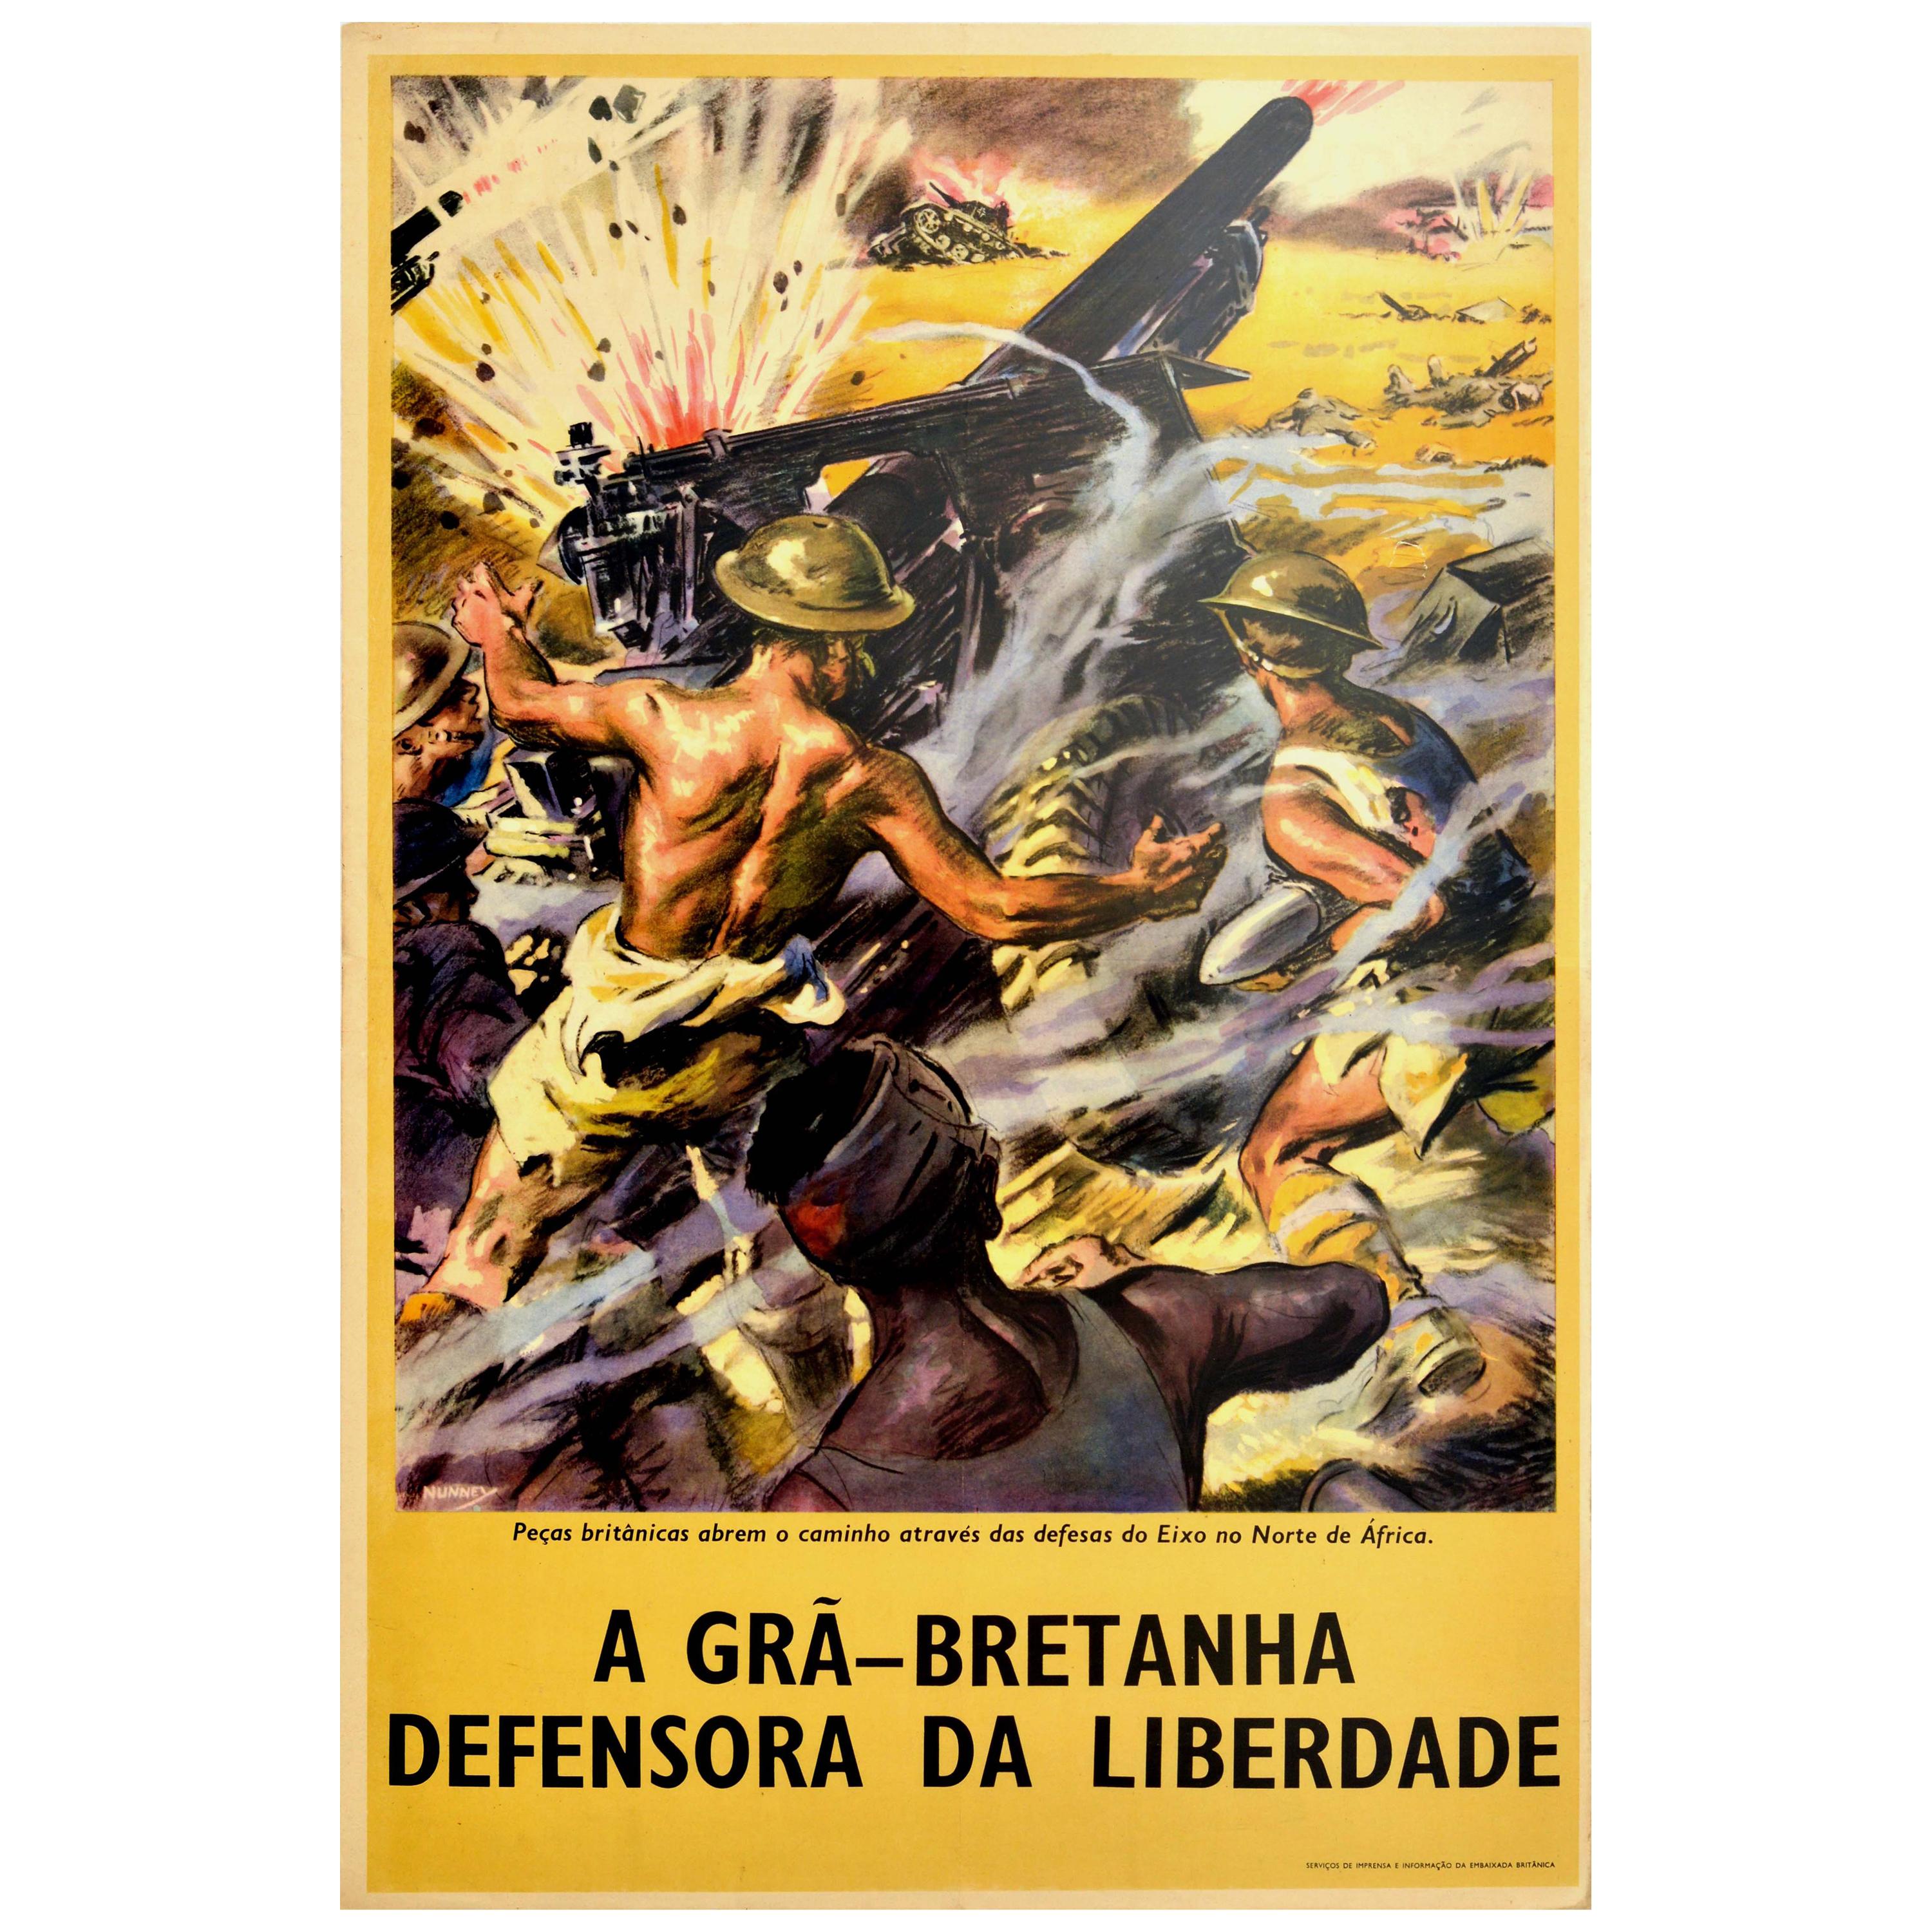 Original Vintage Poster Defender Of Freedom British Forces N. Africa WWII Army